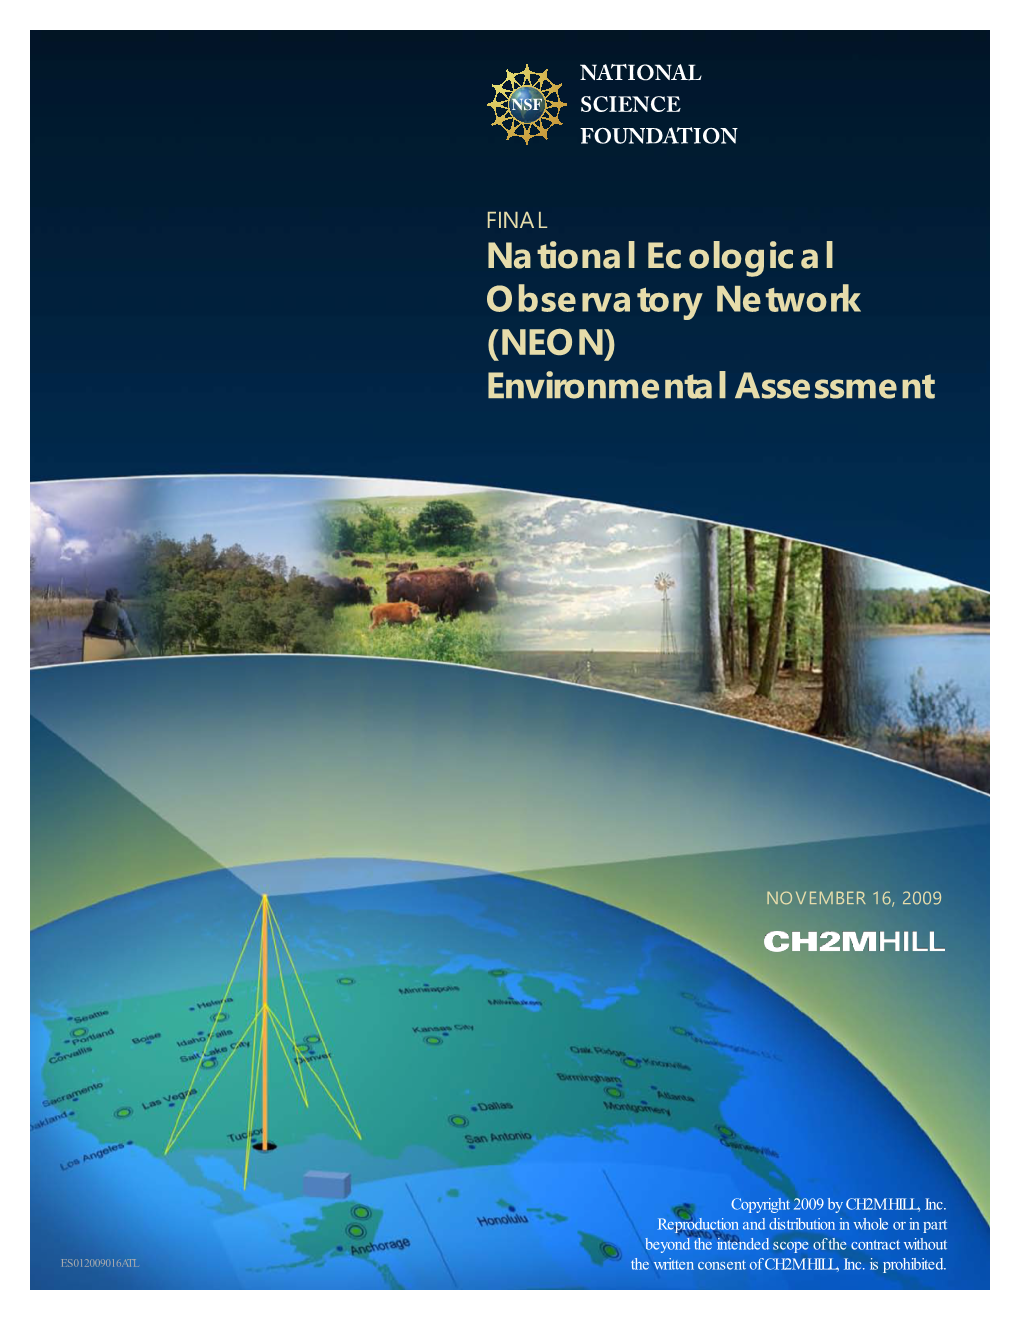 NEON) Environmental Assessment